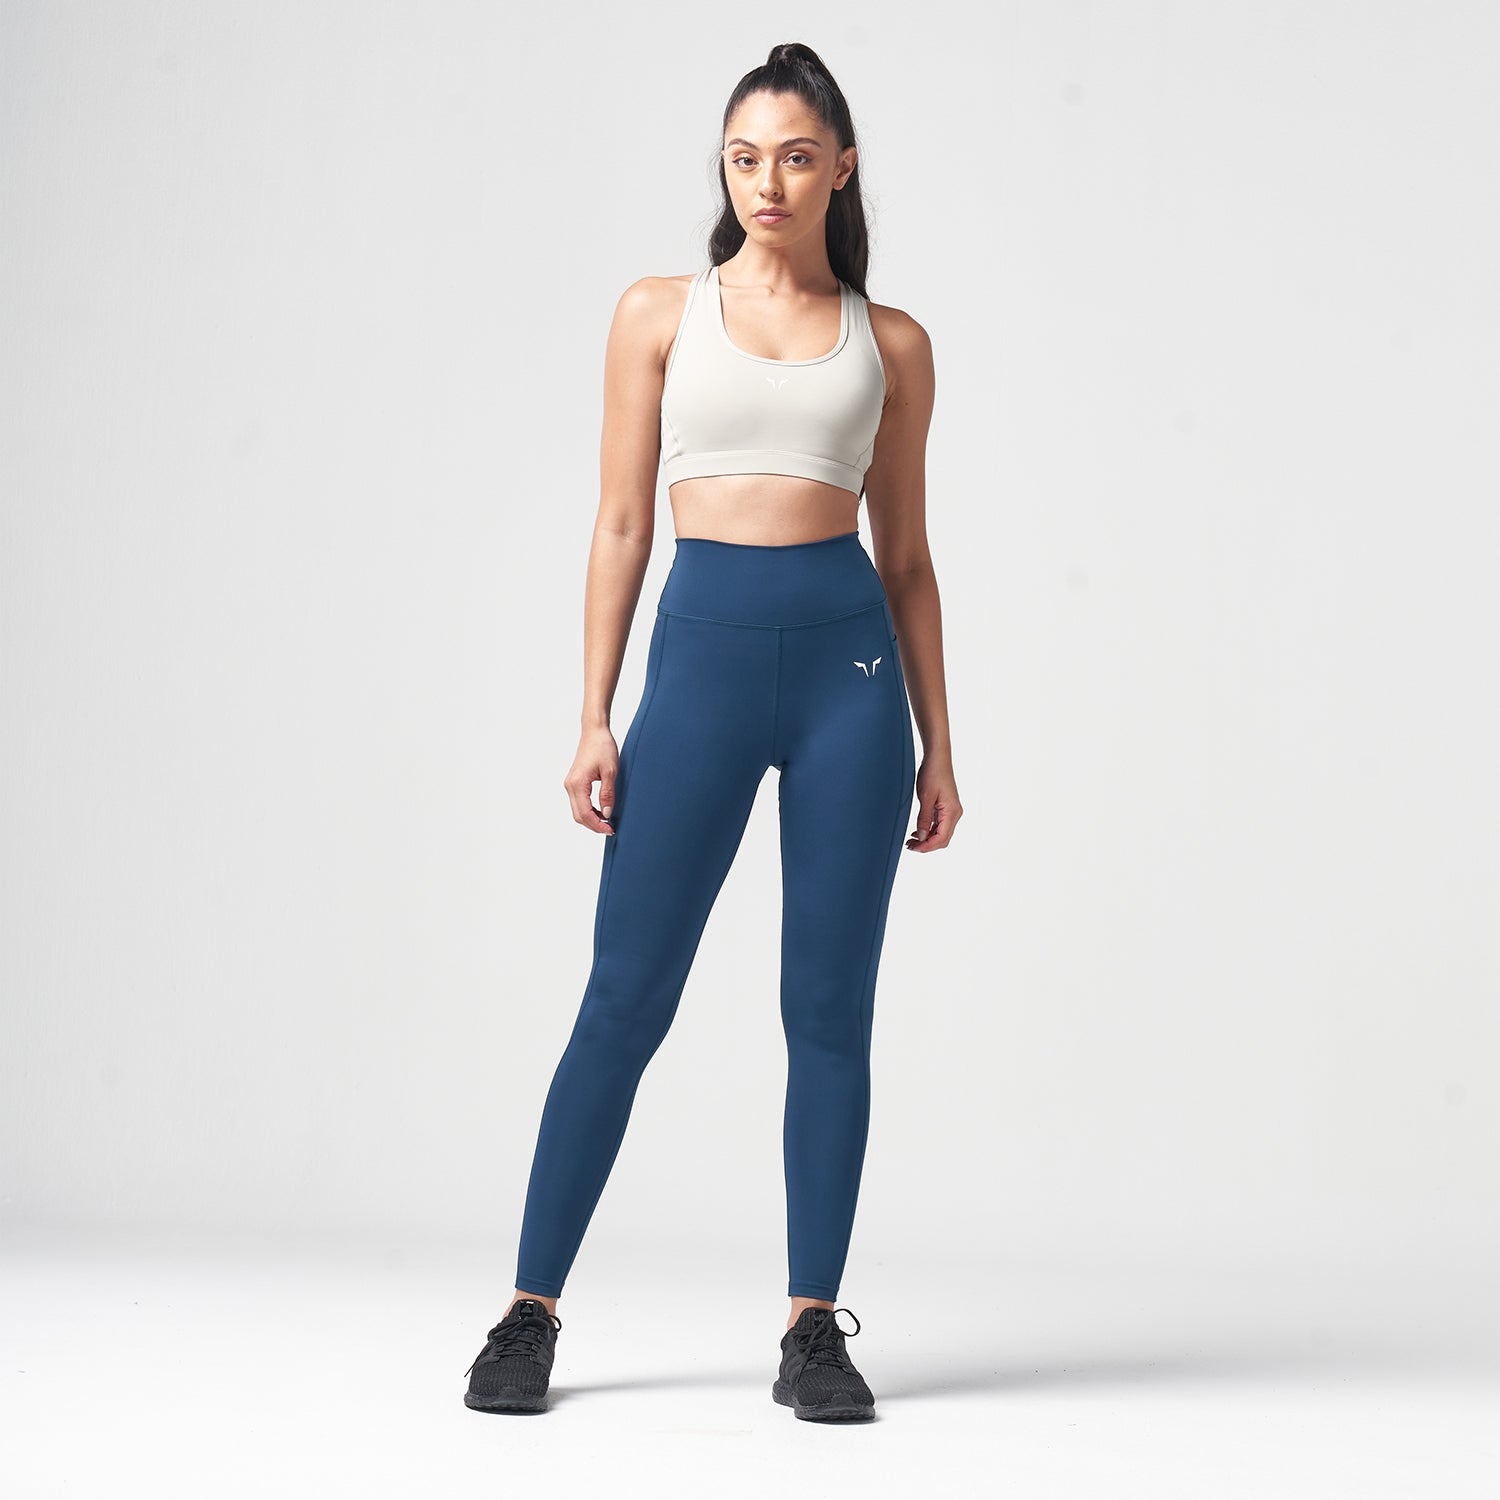 Yoga Pants for Women Gym Leggings Workout Leggings High Waisted